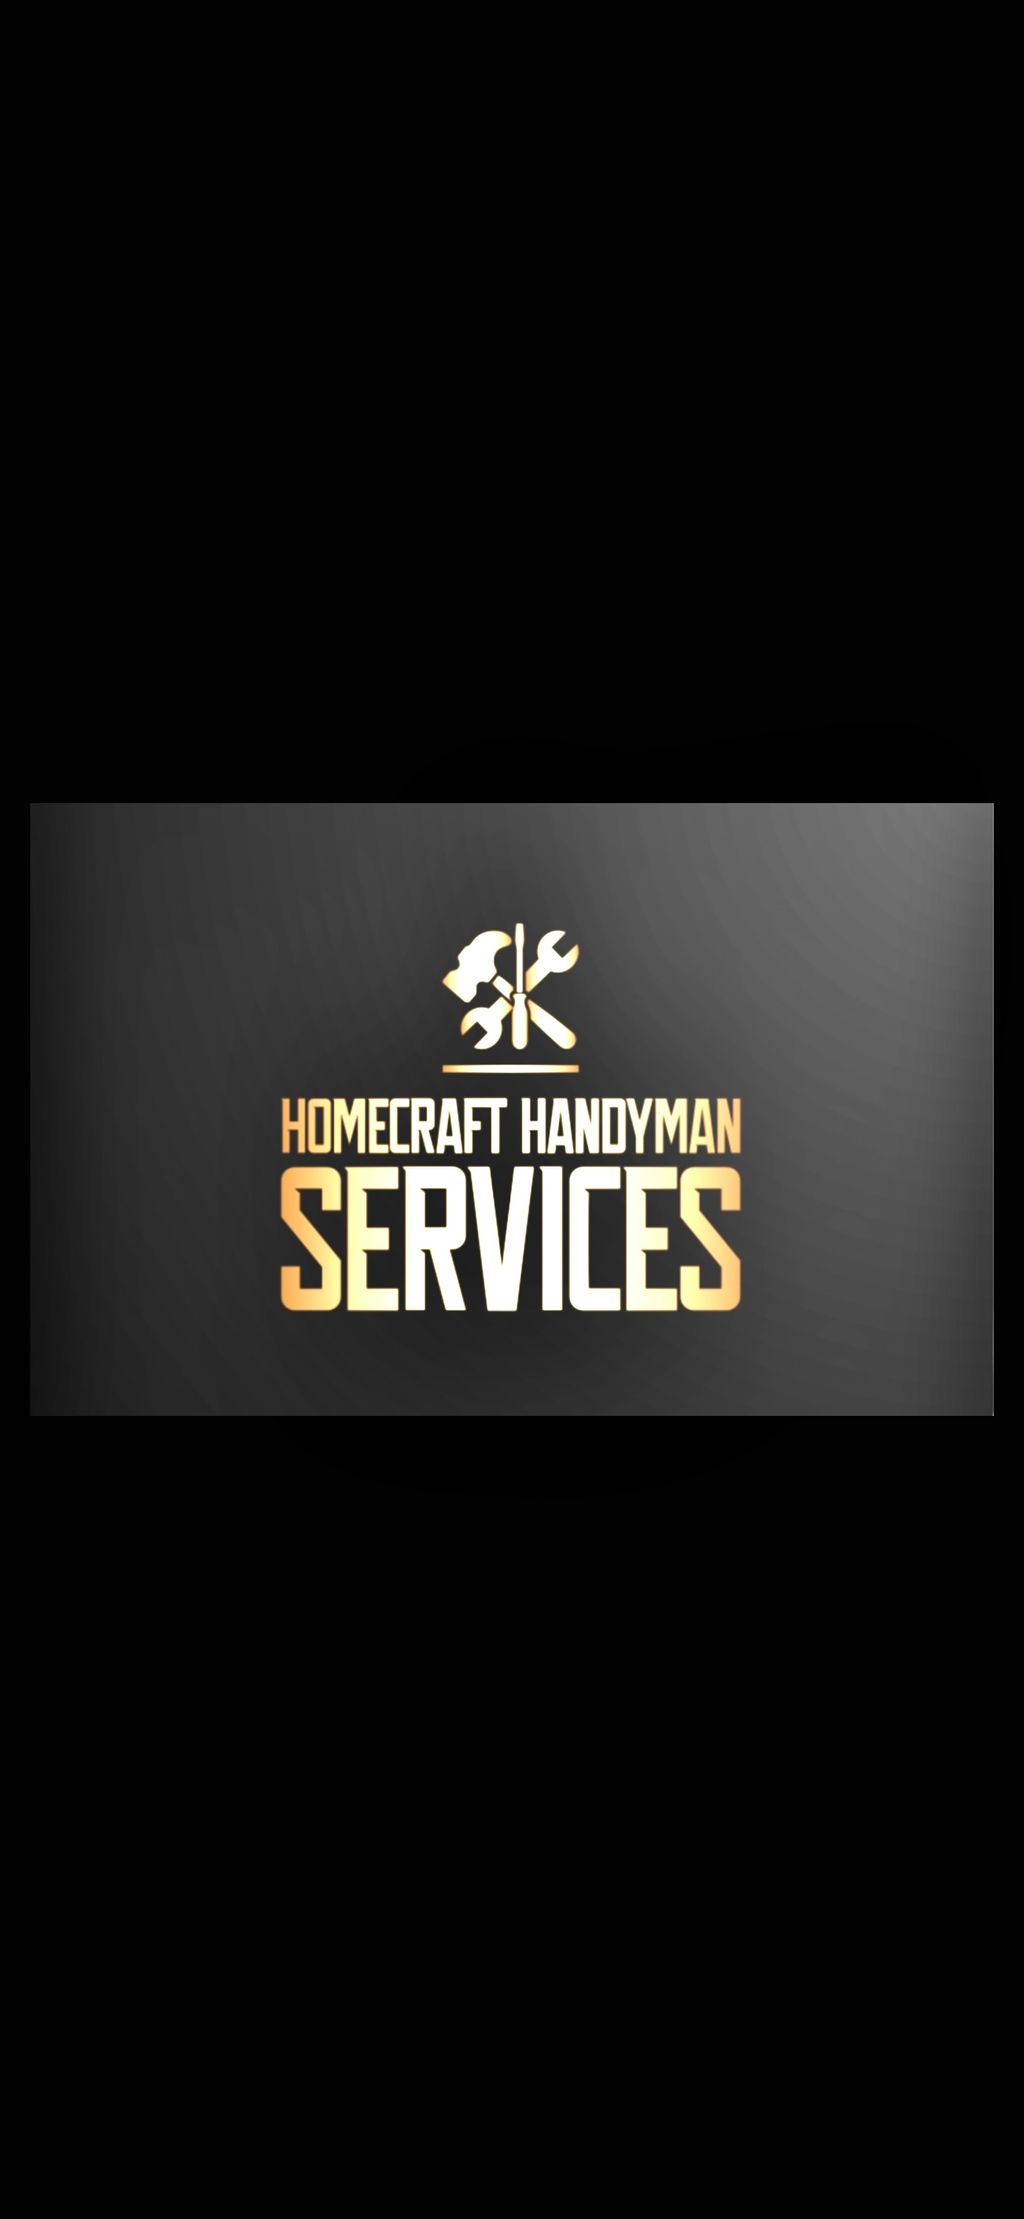 HomeCraft Handyman Services